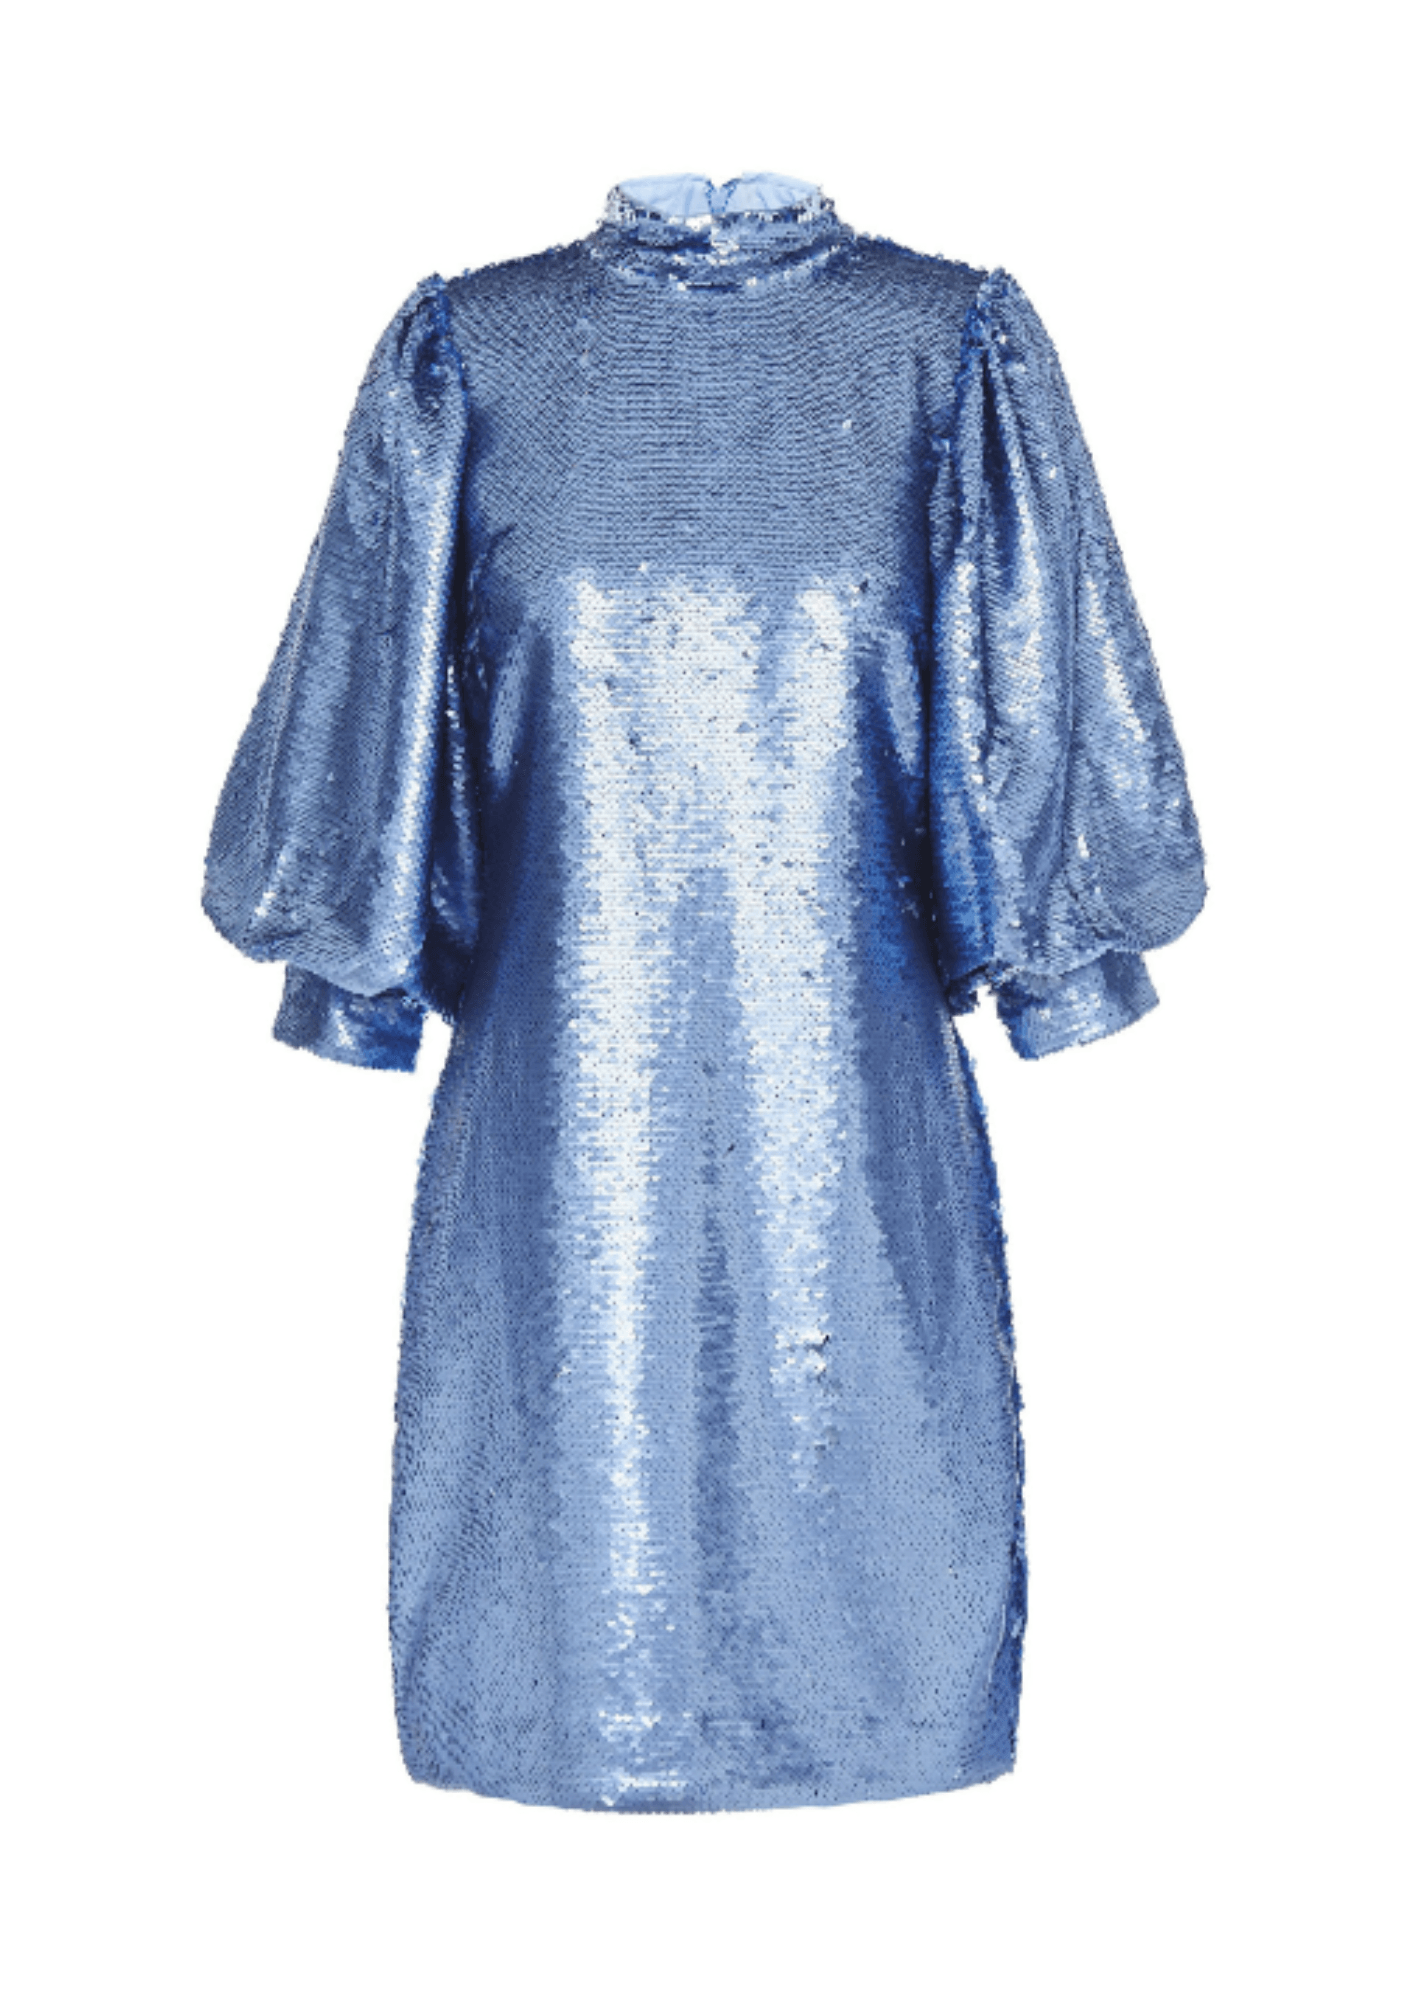 SEQUINS MINI DRESS - LIGHT BLUE - codressing